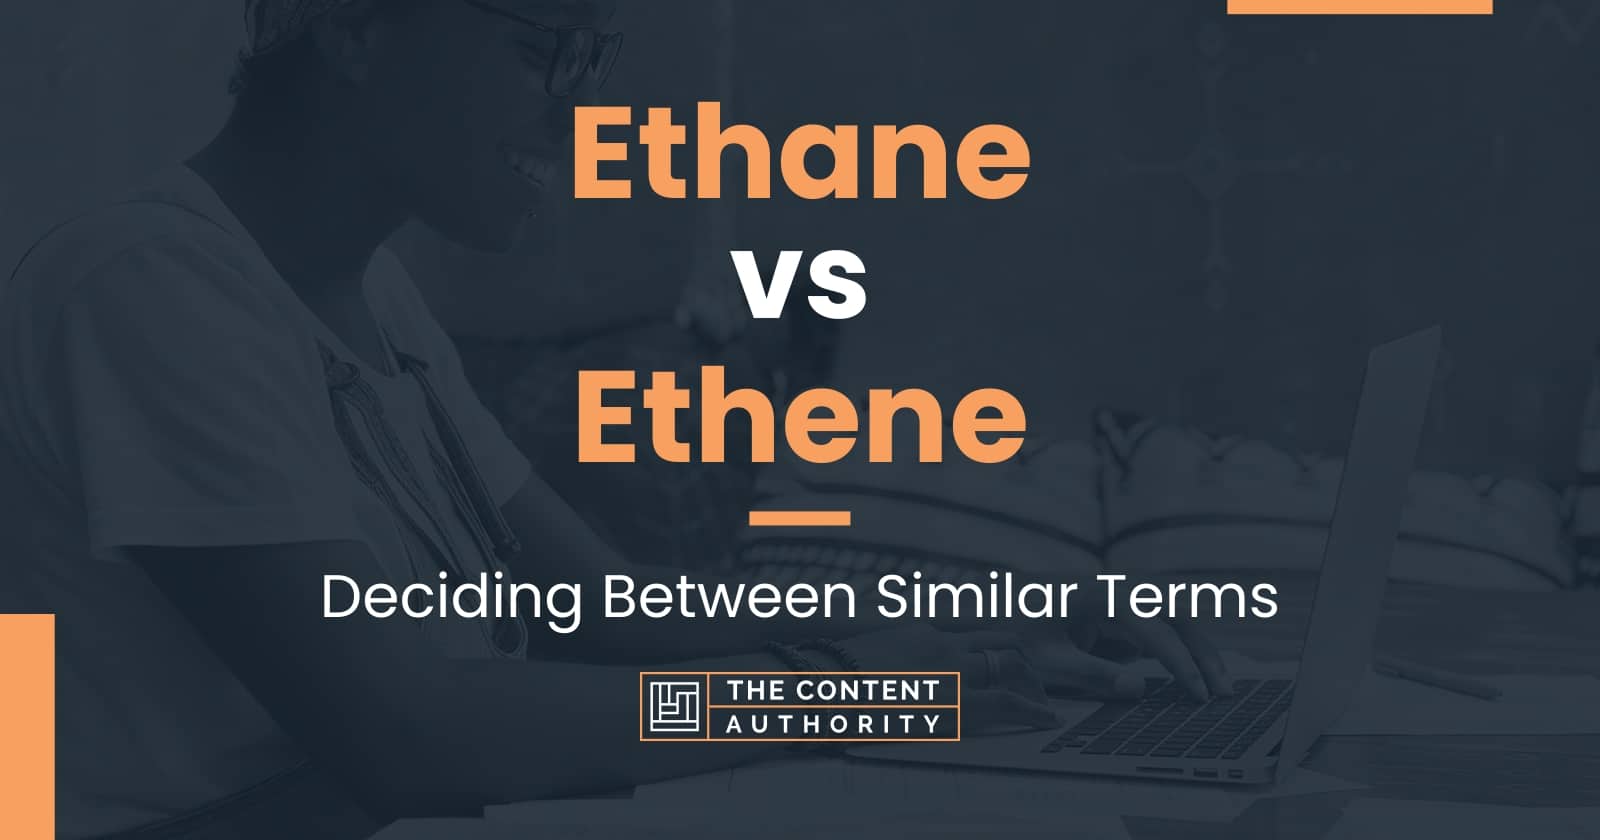 Ethane vs Ethene: Deciding Between Similar Terms